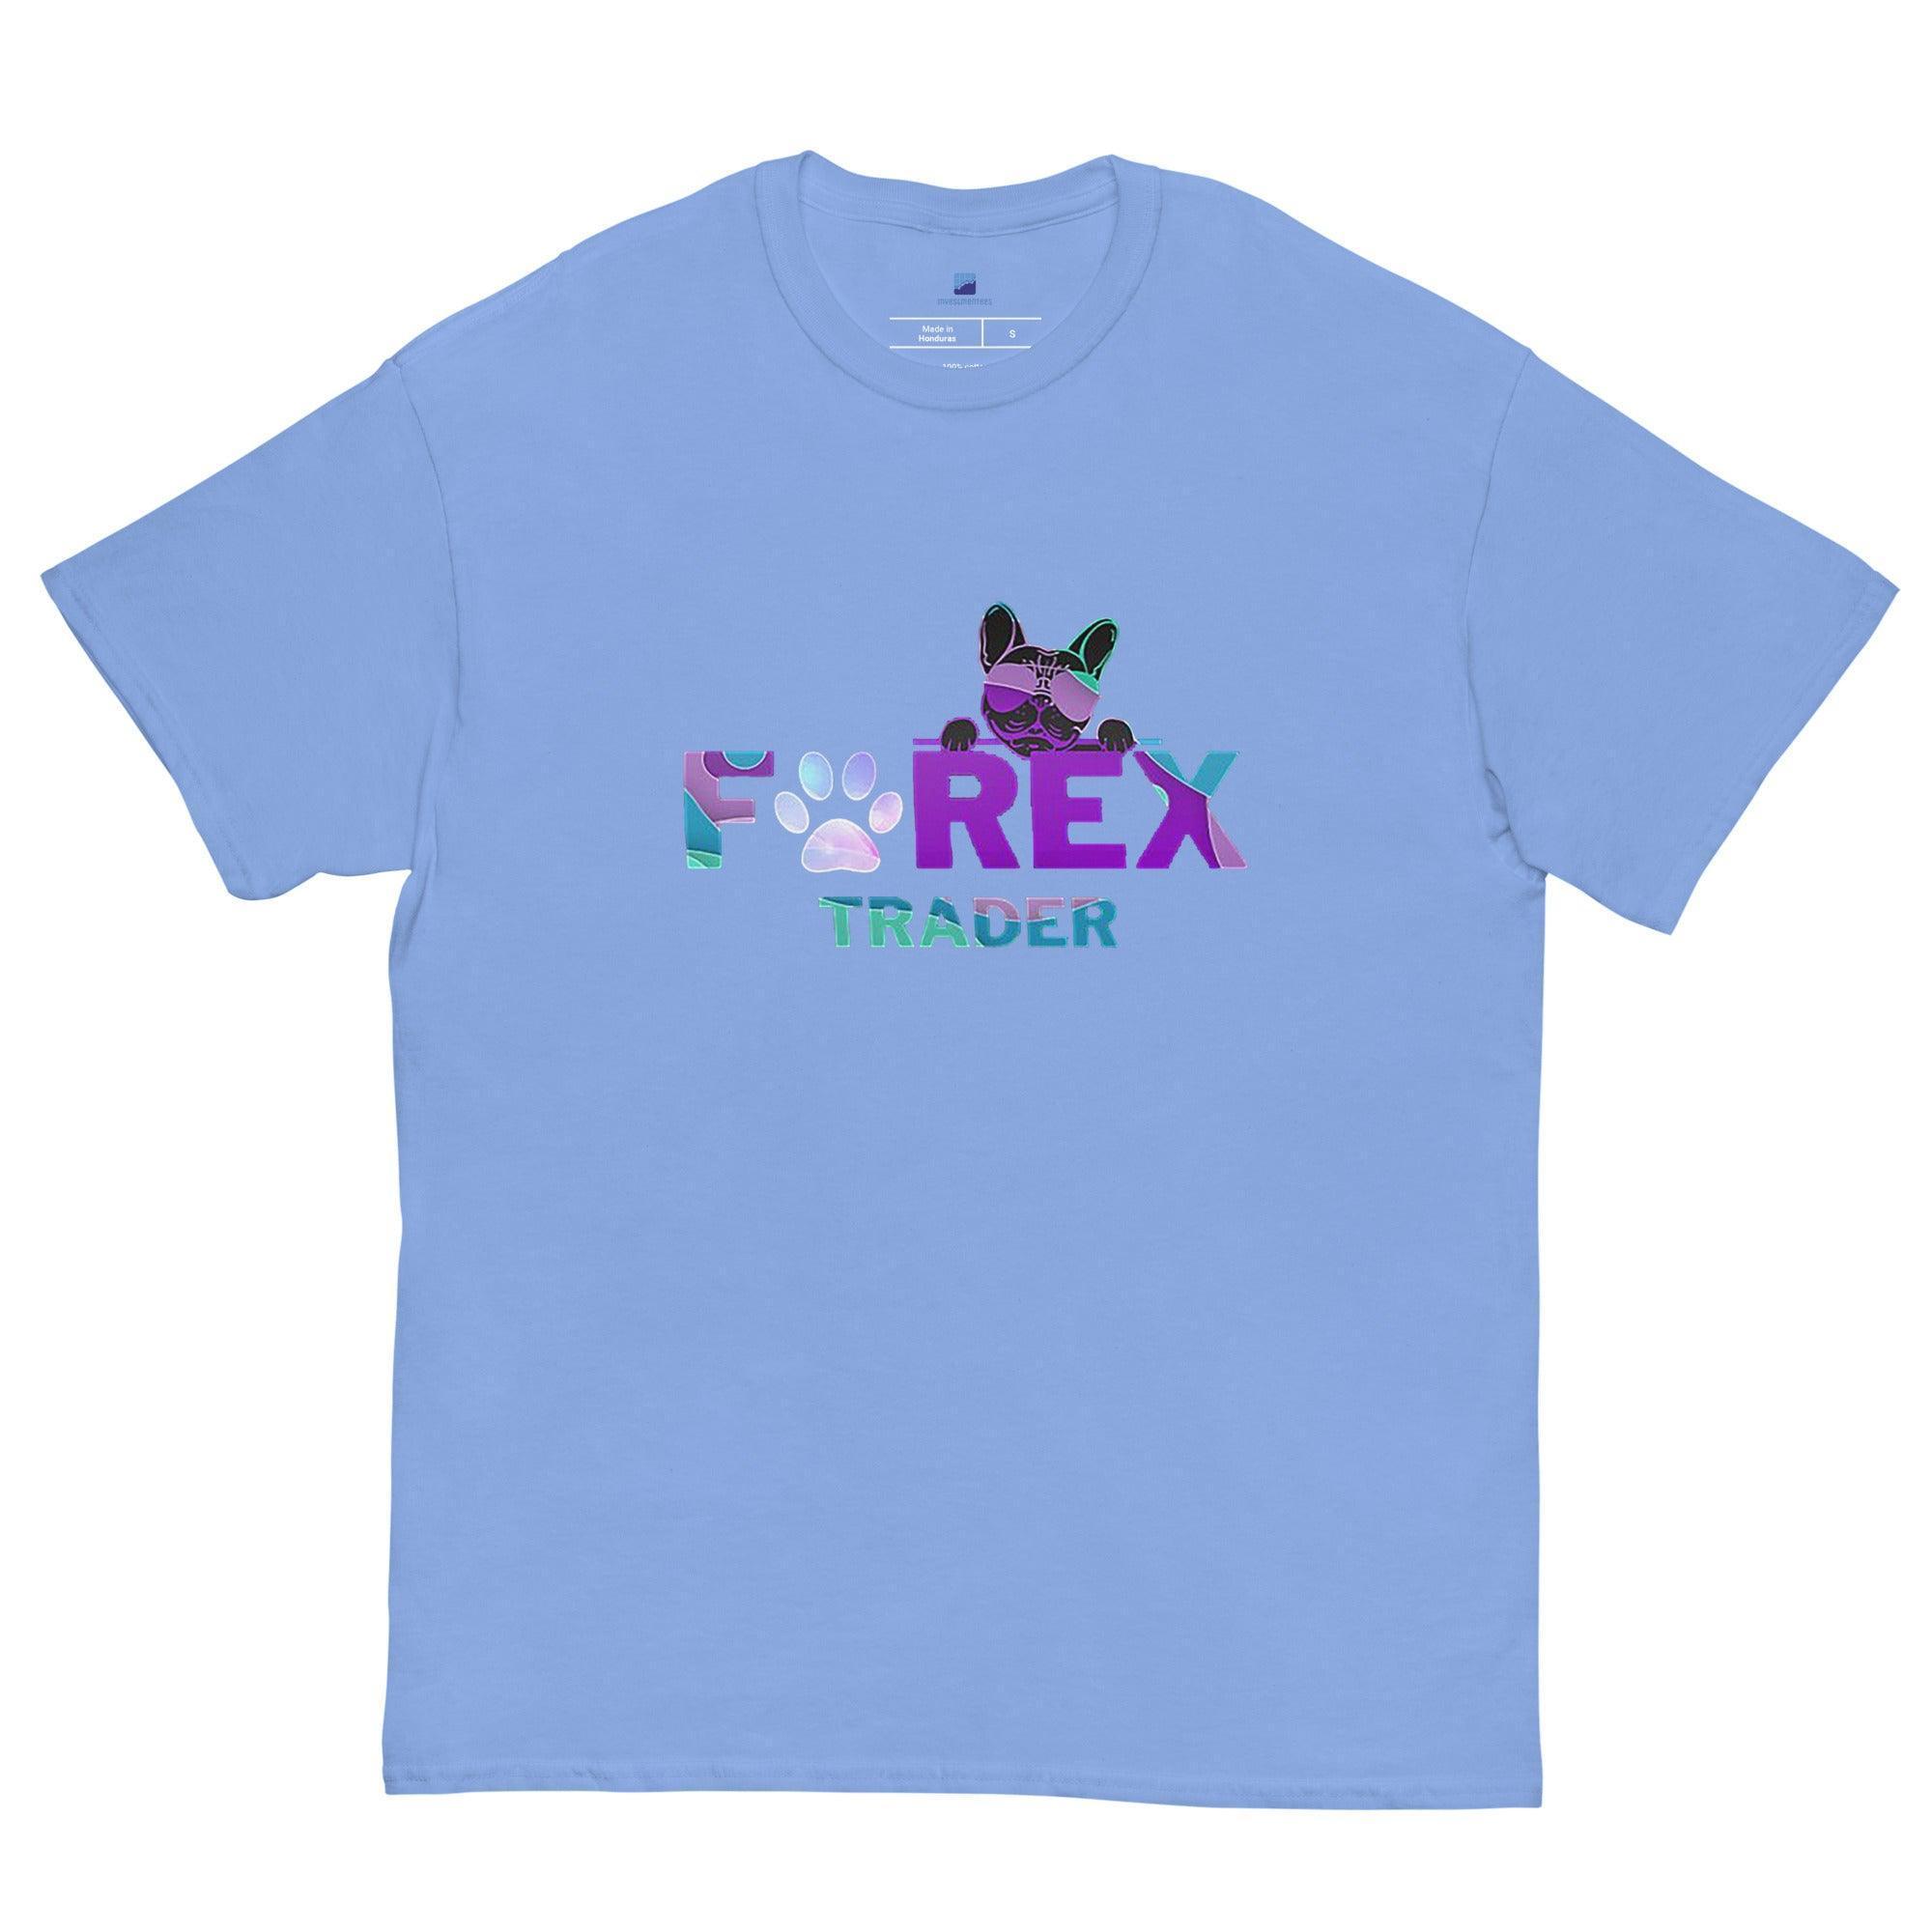 Forex Trader T-Shirt - InvestmenTees